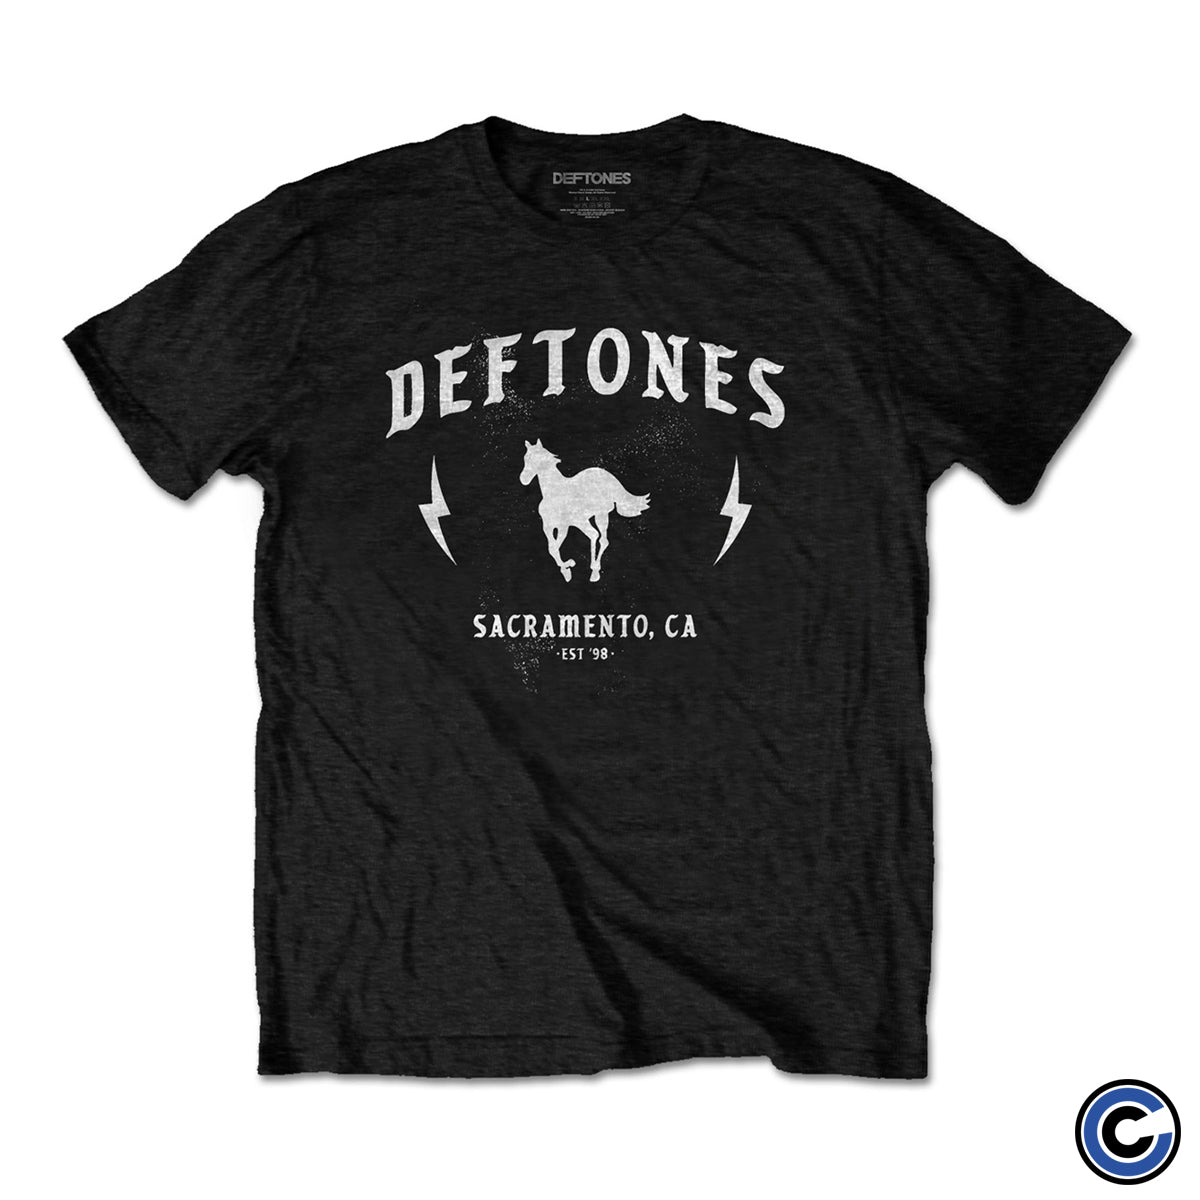 Deftones "Electric Pony" Shirt